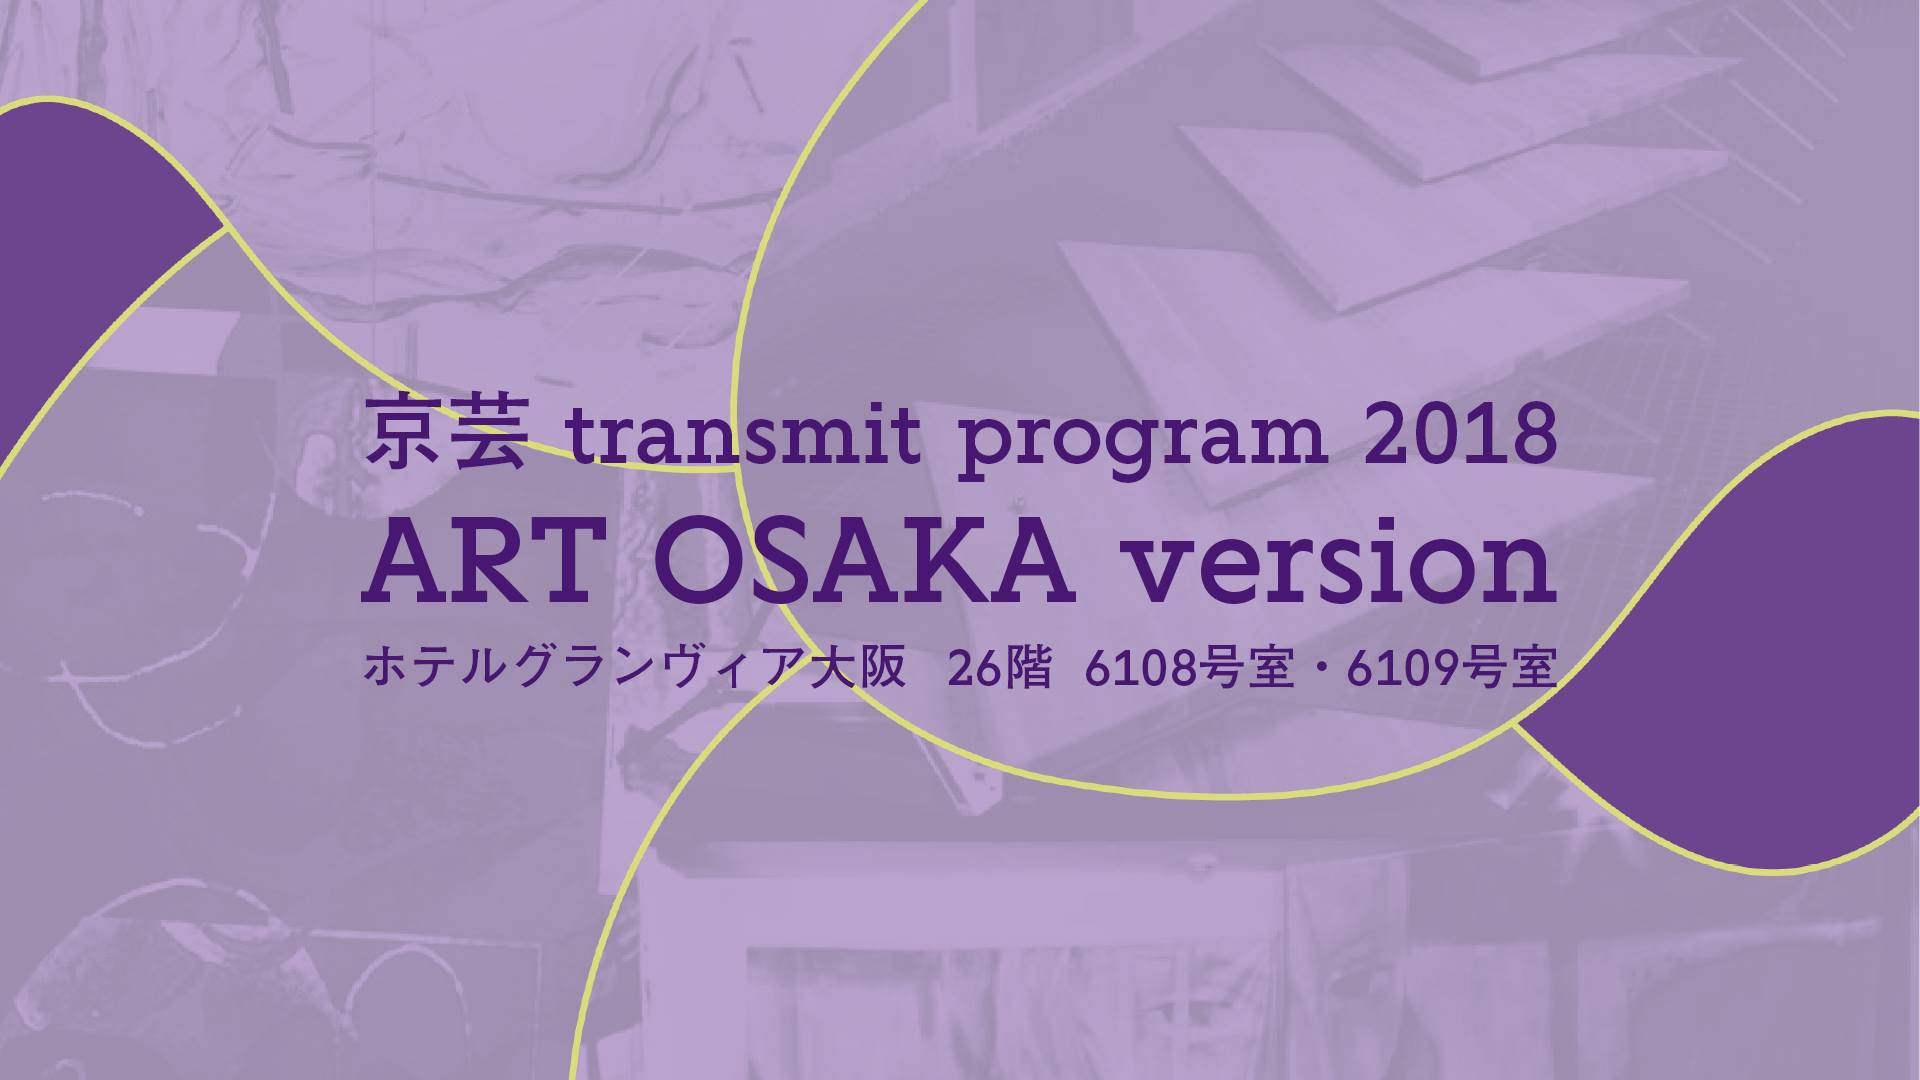 【協力企画】ART OSAKA 「京芸 transmit program 2018: ART OSAKA version」